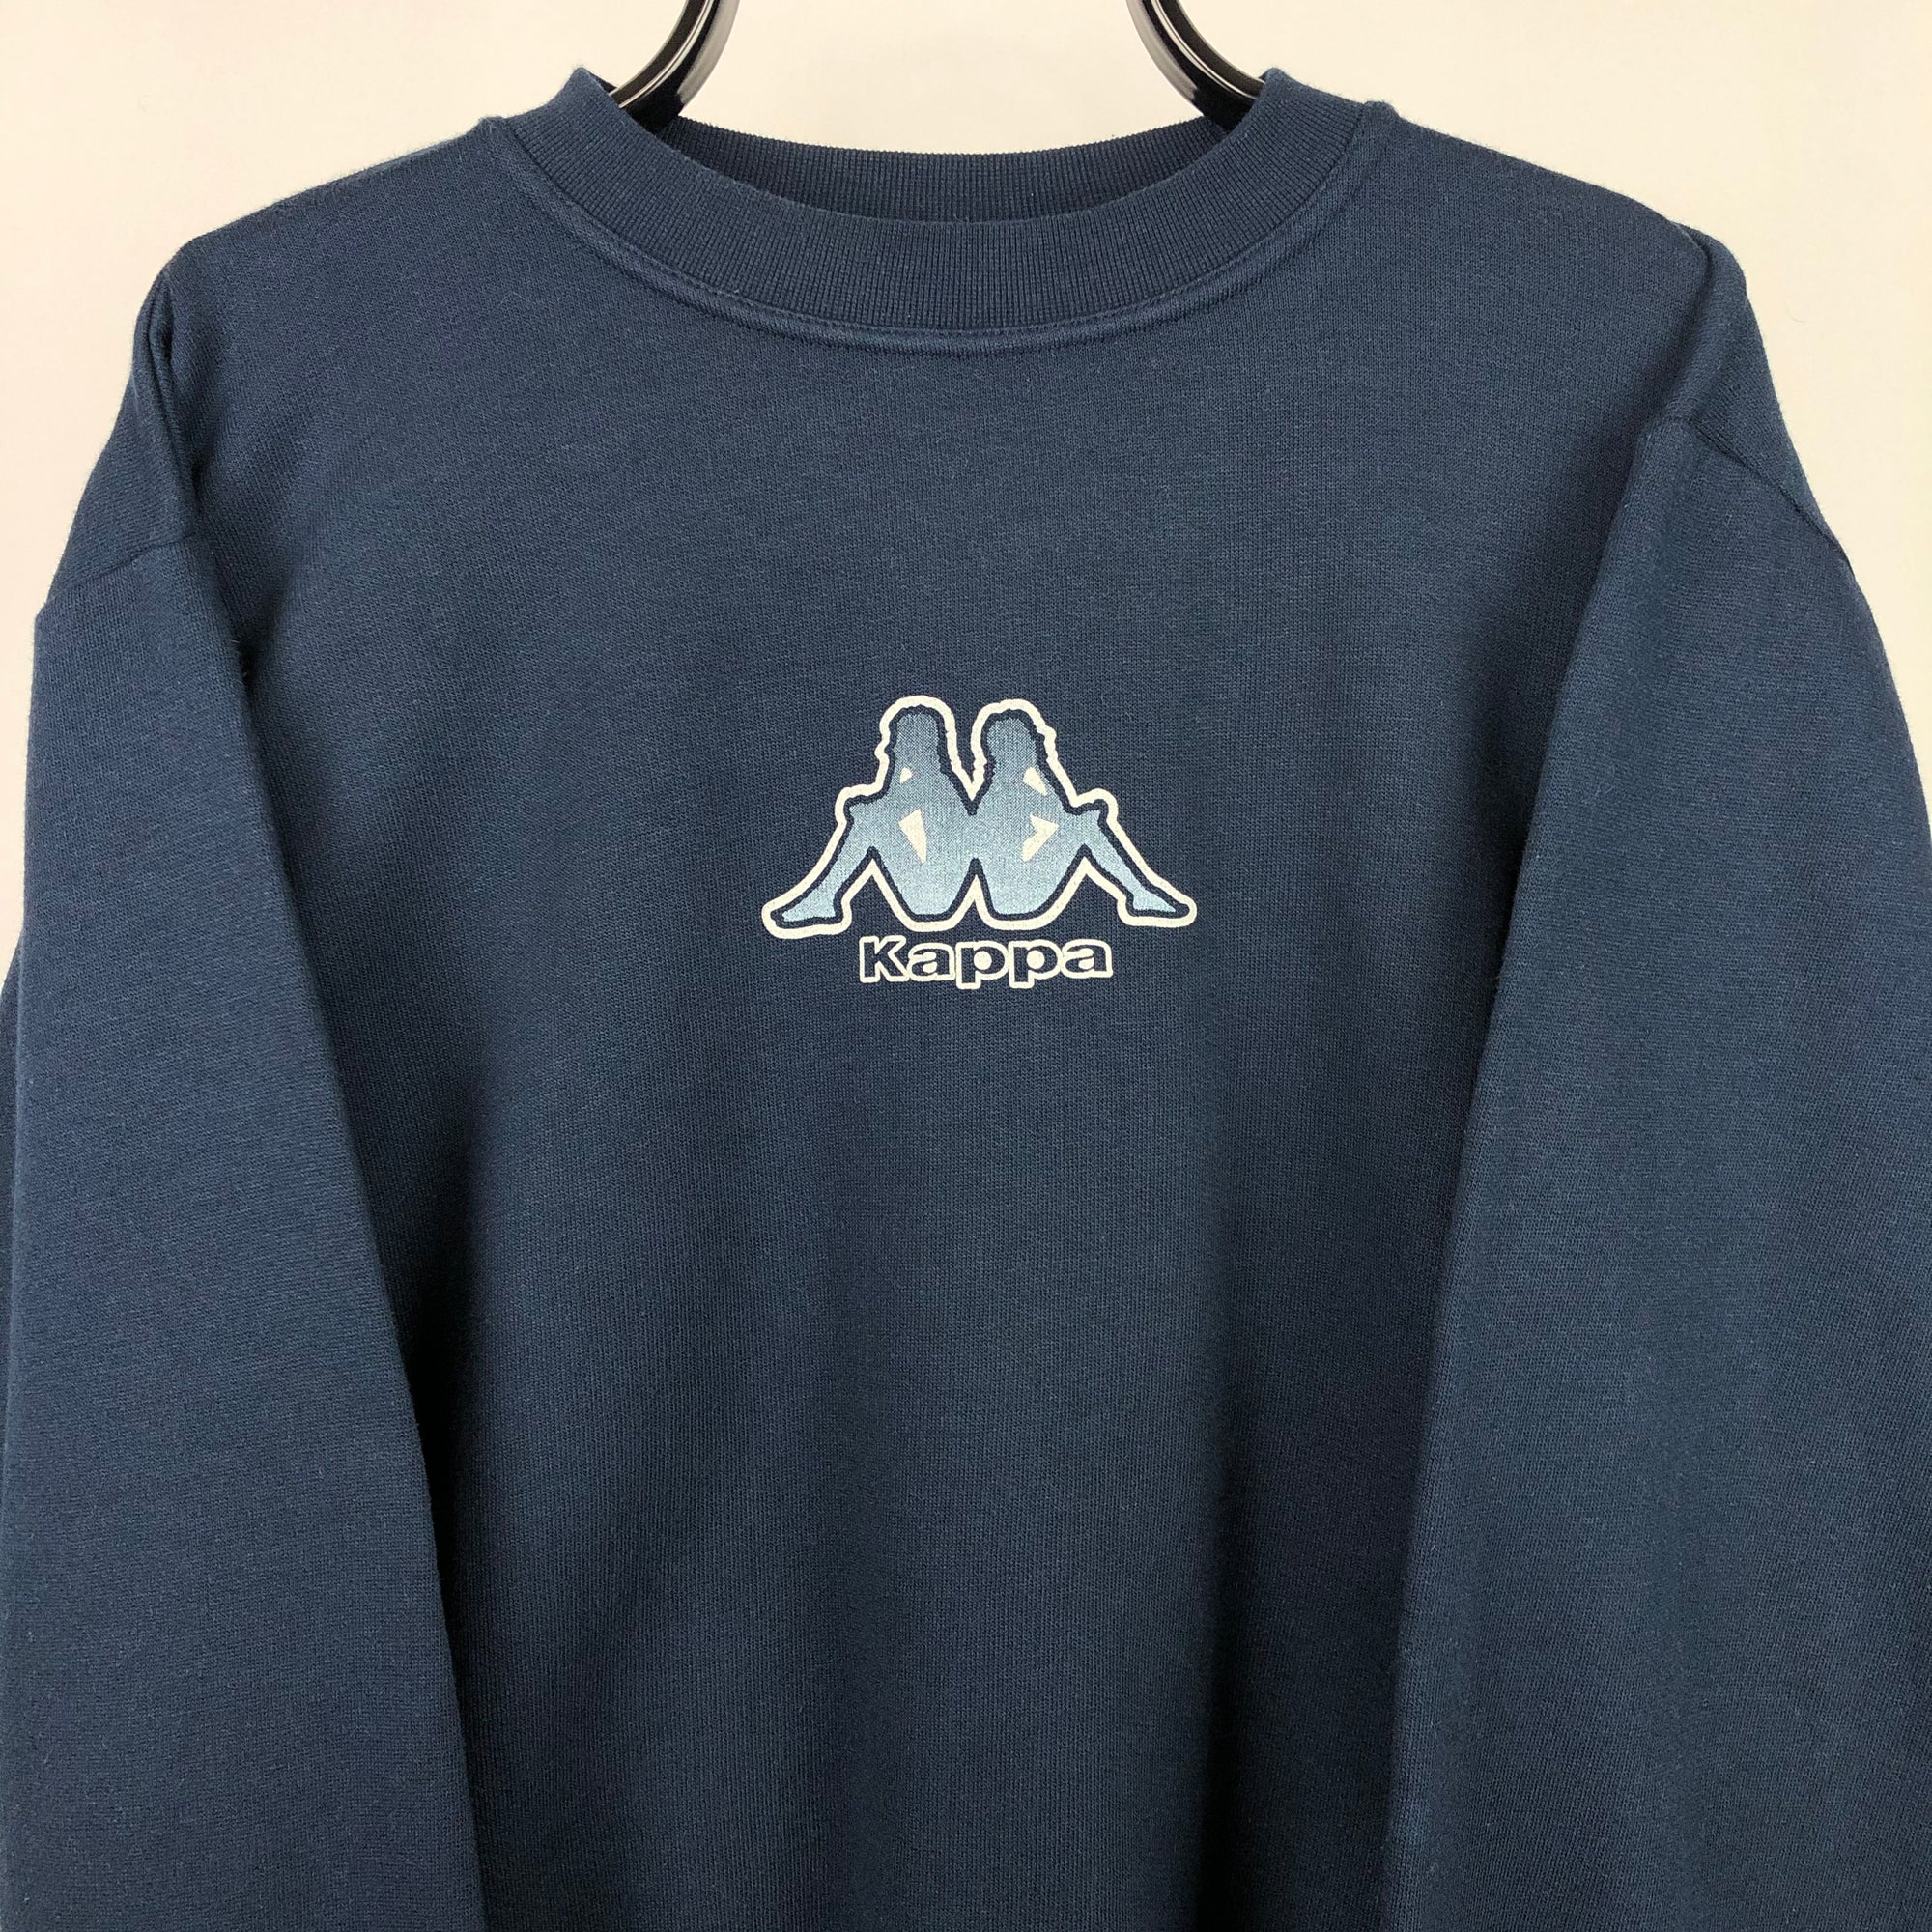 Vintage Kappa Centre Logo Sweatshirt in Navy - Men's Medium/Women's Large